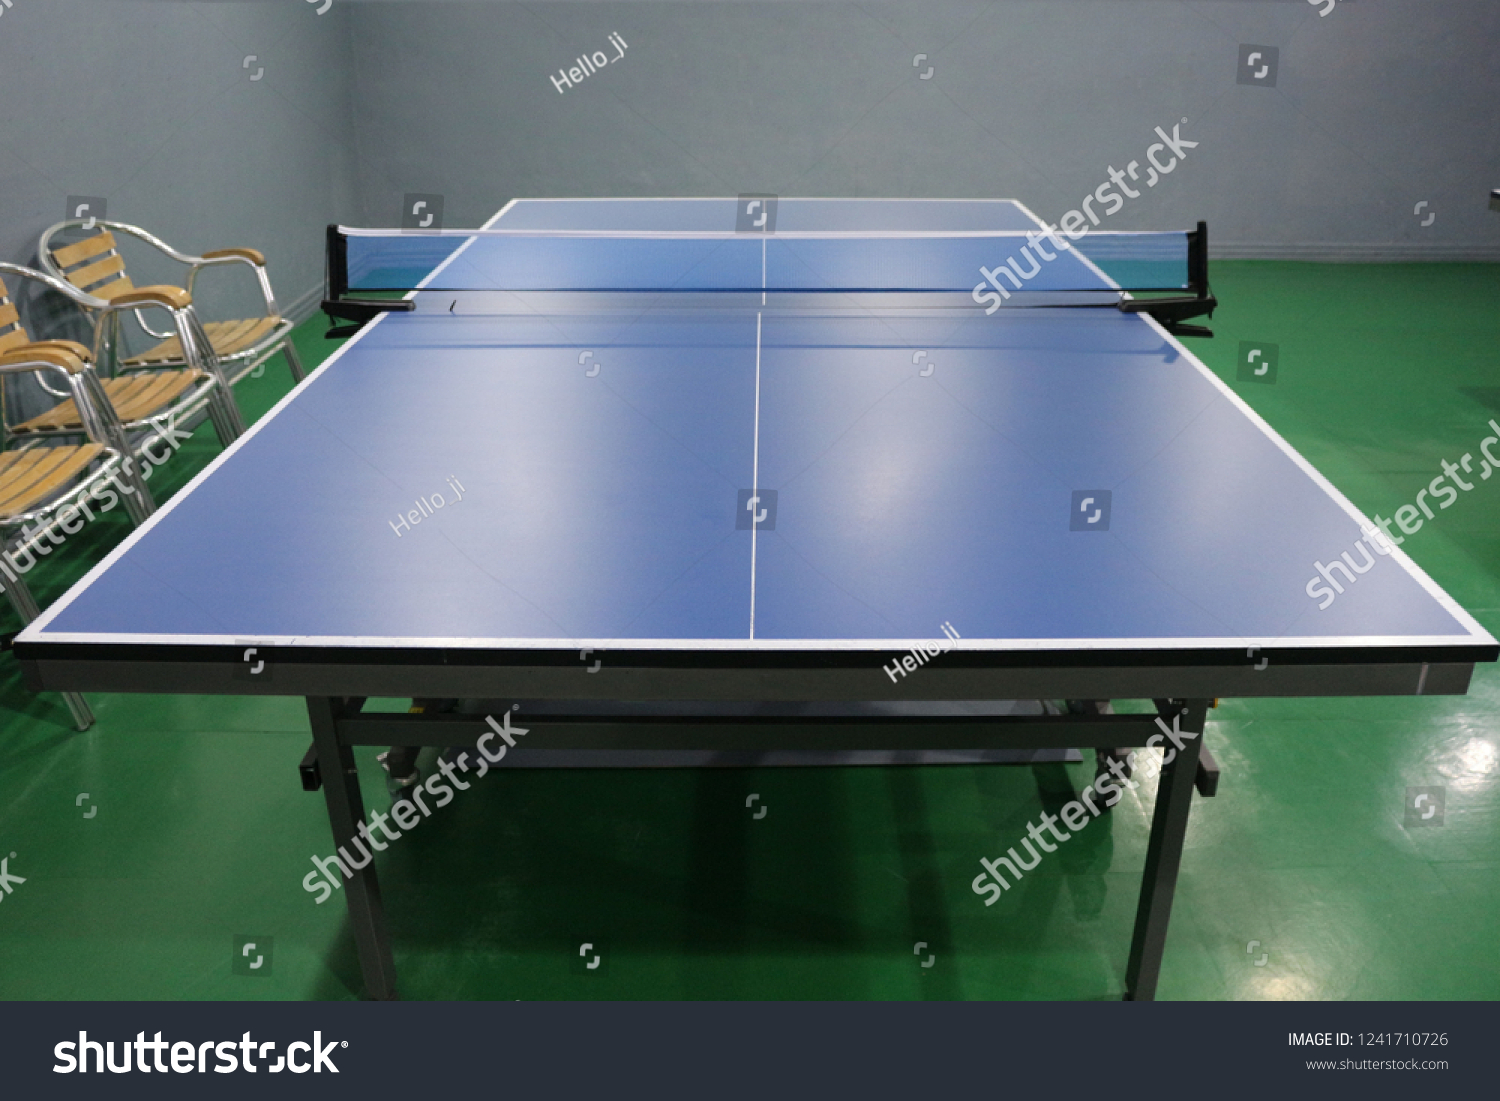 table tennis facility